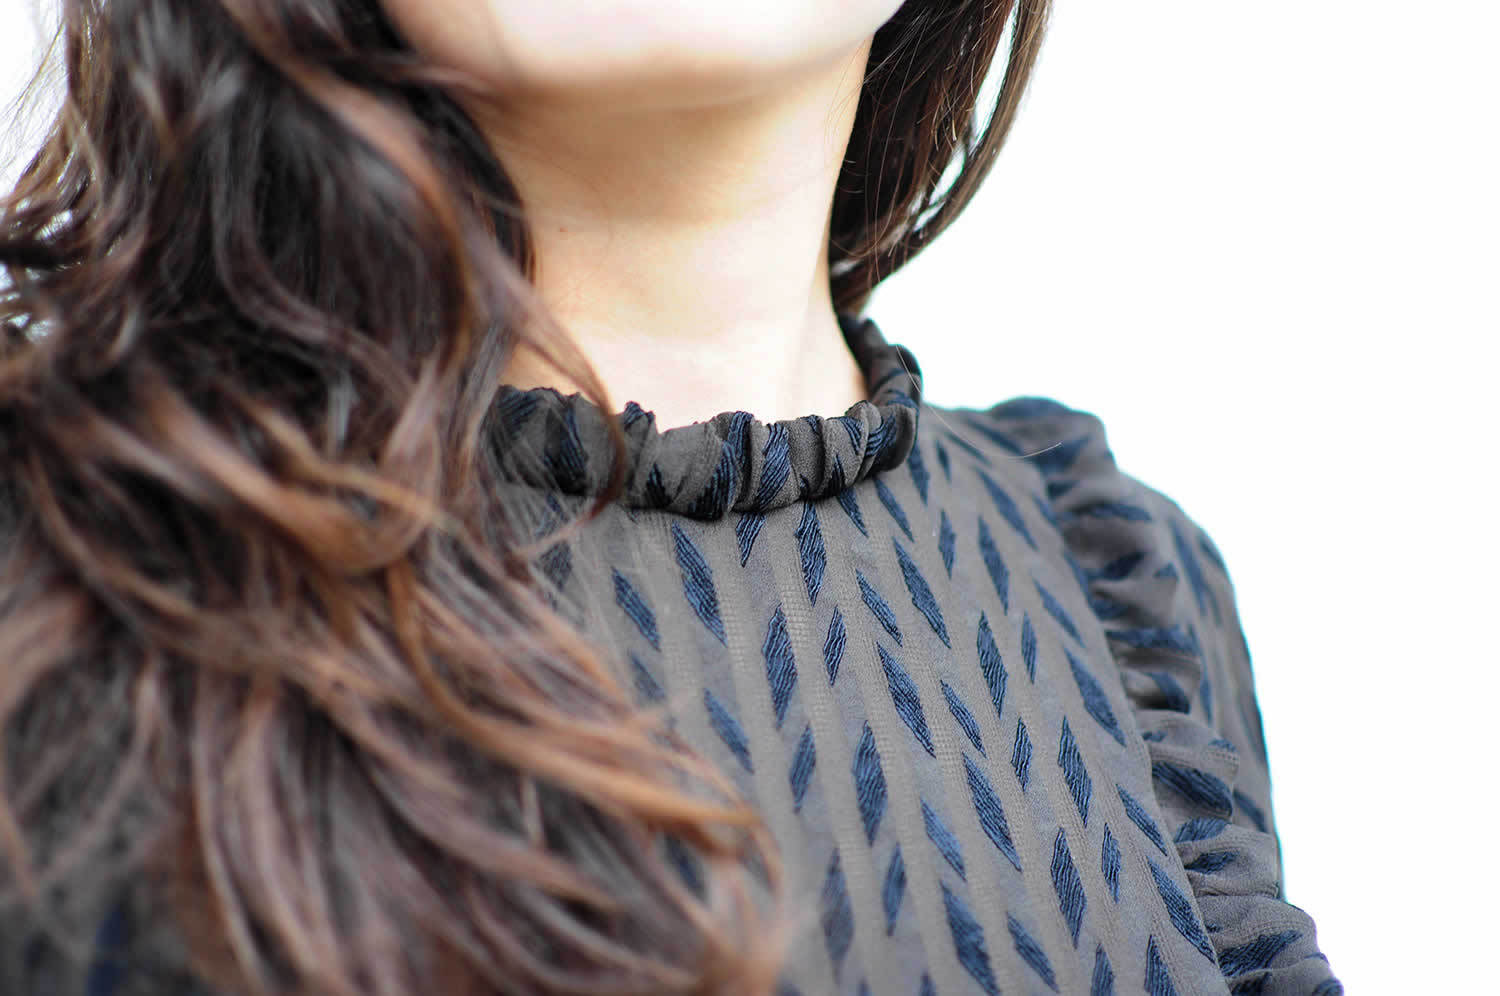 Ladulsatina - Sewing blog - Blog di cucito - Jolanda blusa by Atelier Vicolo n 6 in silk viscose blend - Front neckline details